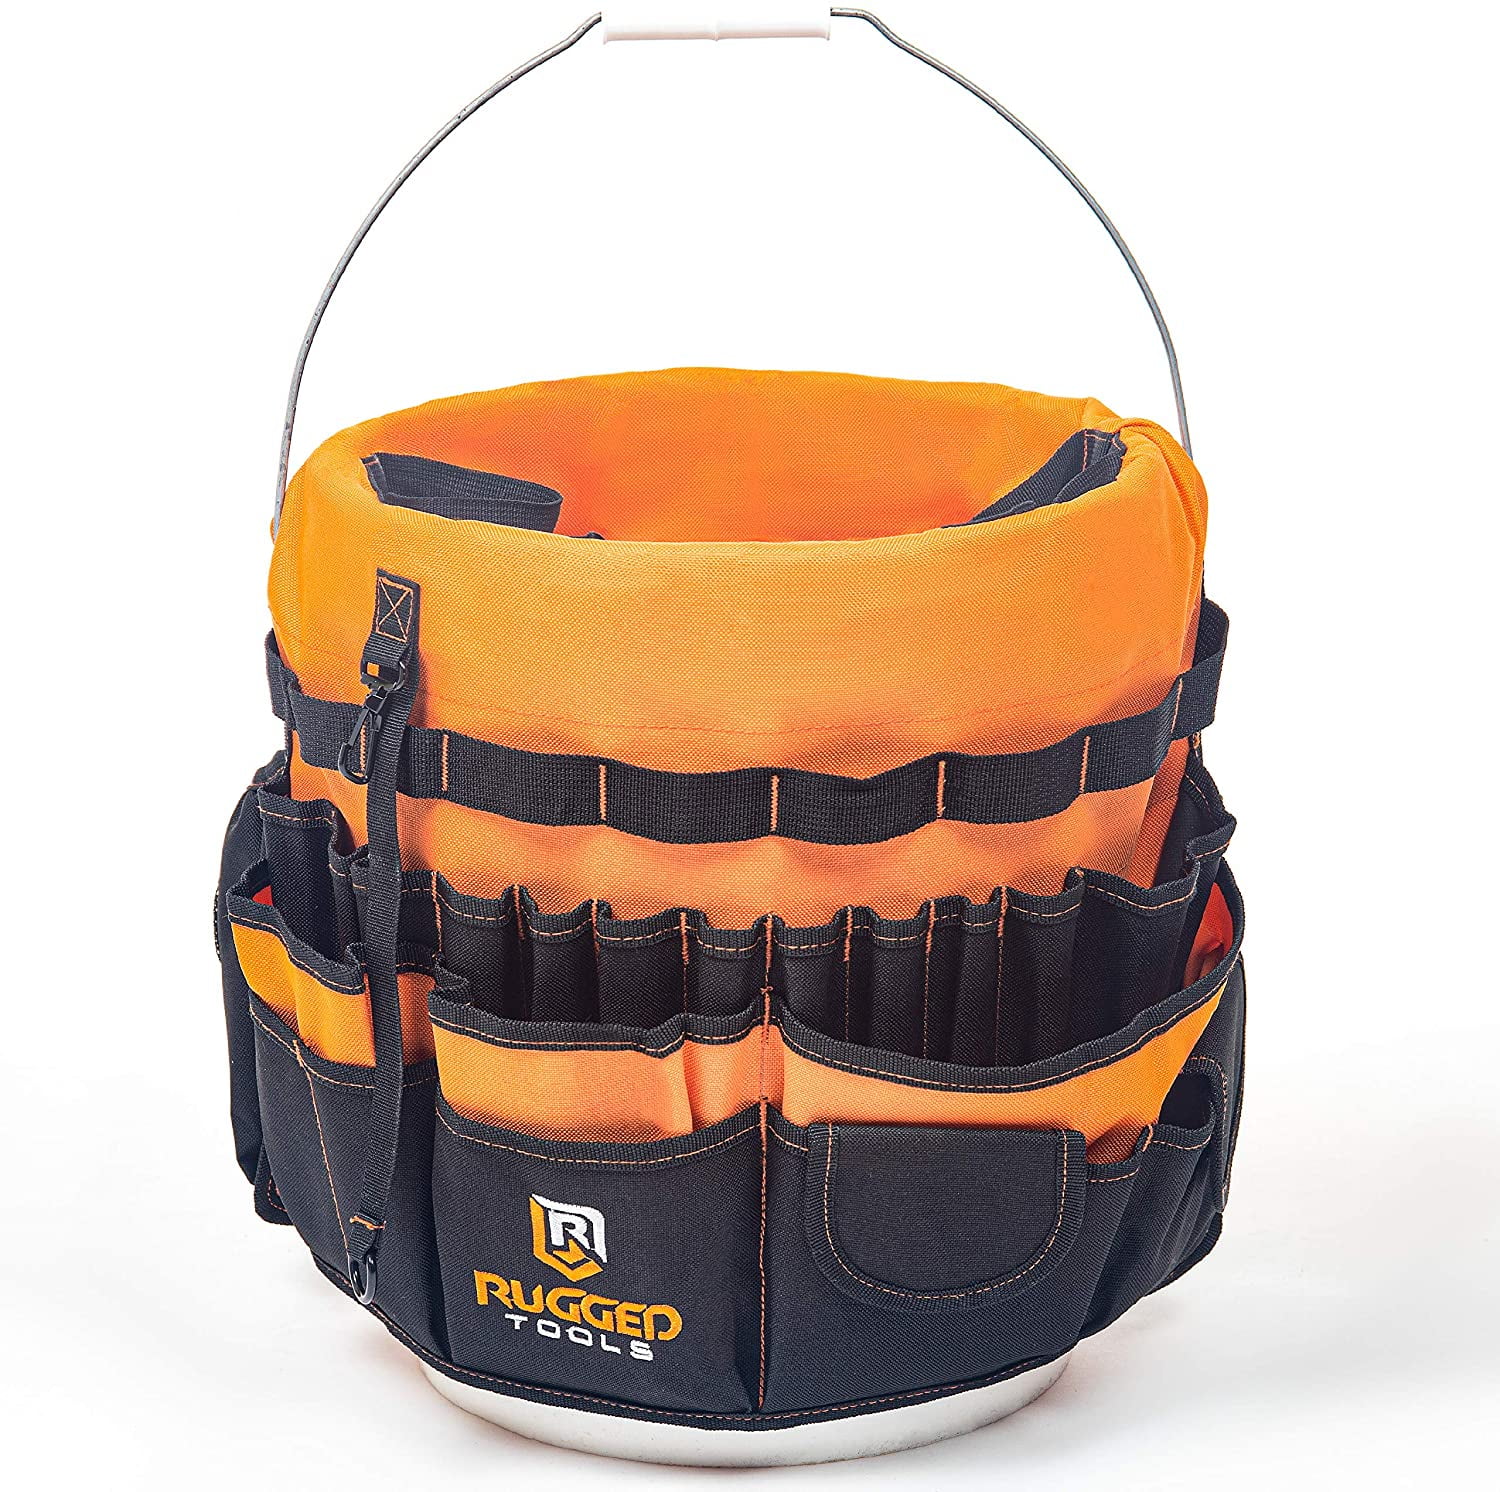 Muel Bucket Tool Organizer - 53 Pocket Caddy for 5 Black, Orange